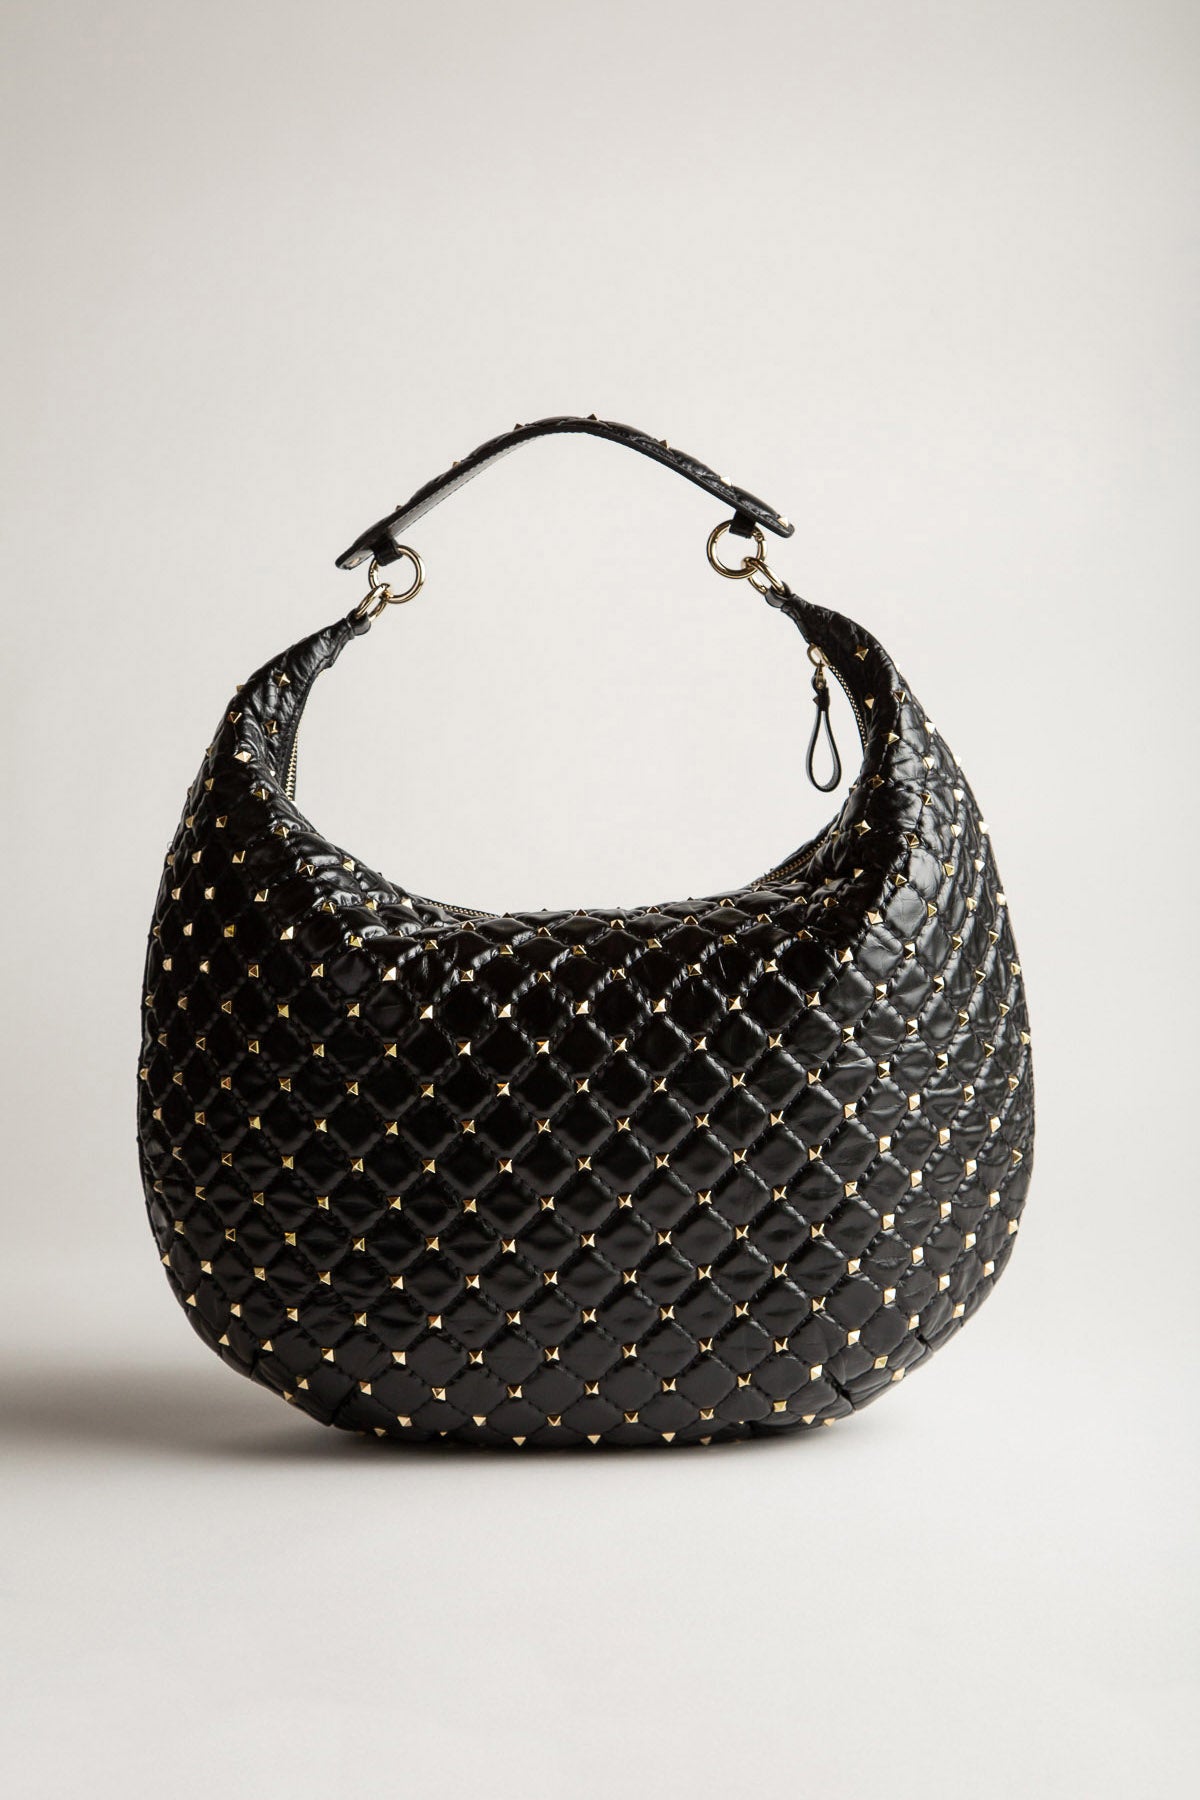 Valentino Garavani Womens Metallic Woven Leather Satchel Silver Large  Handbag